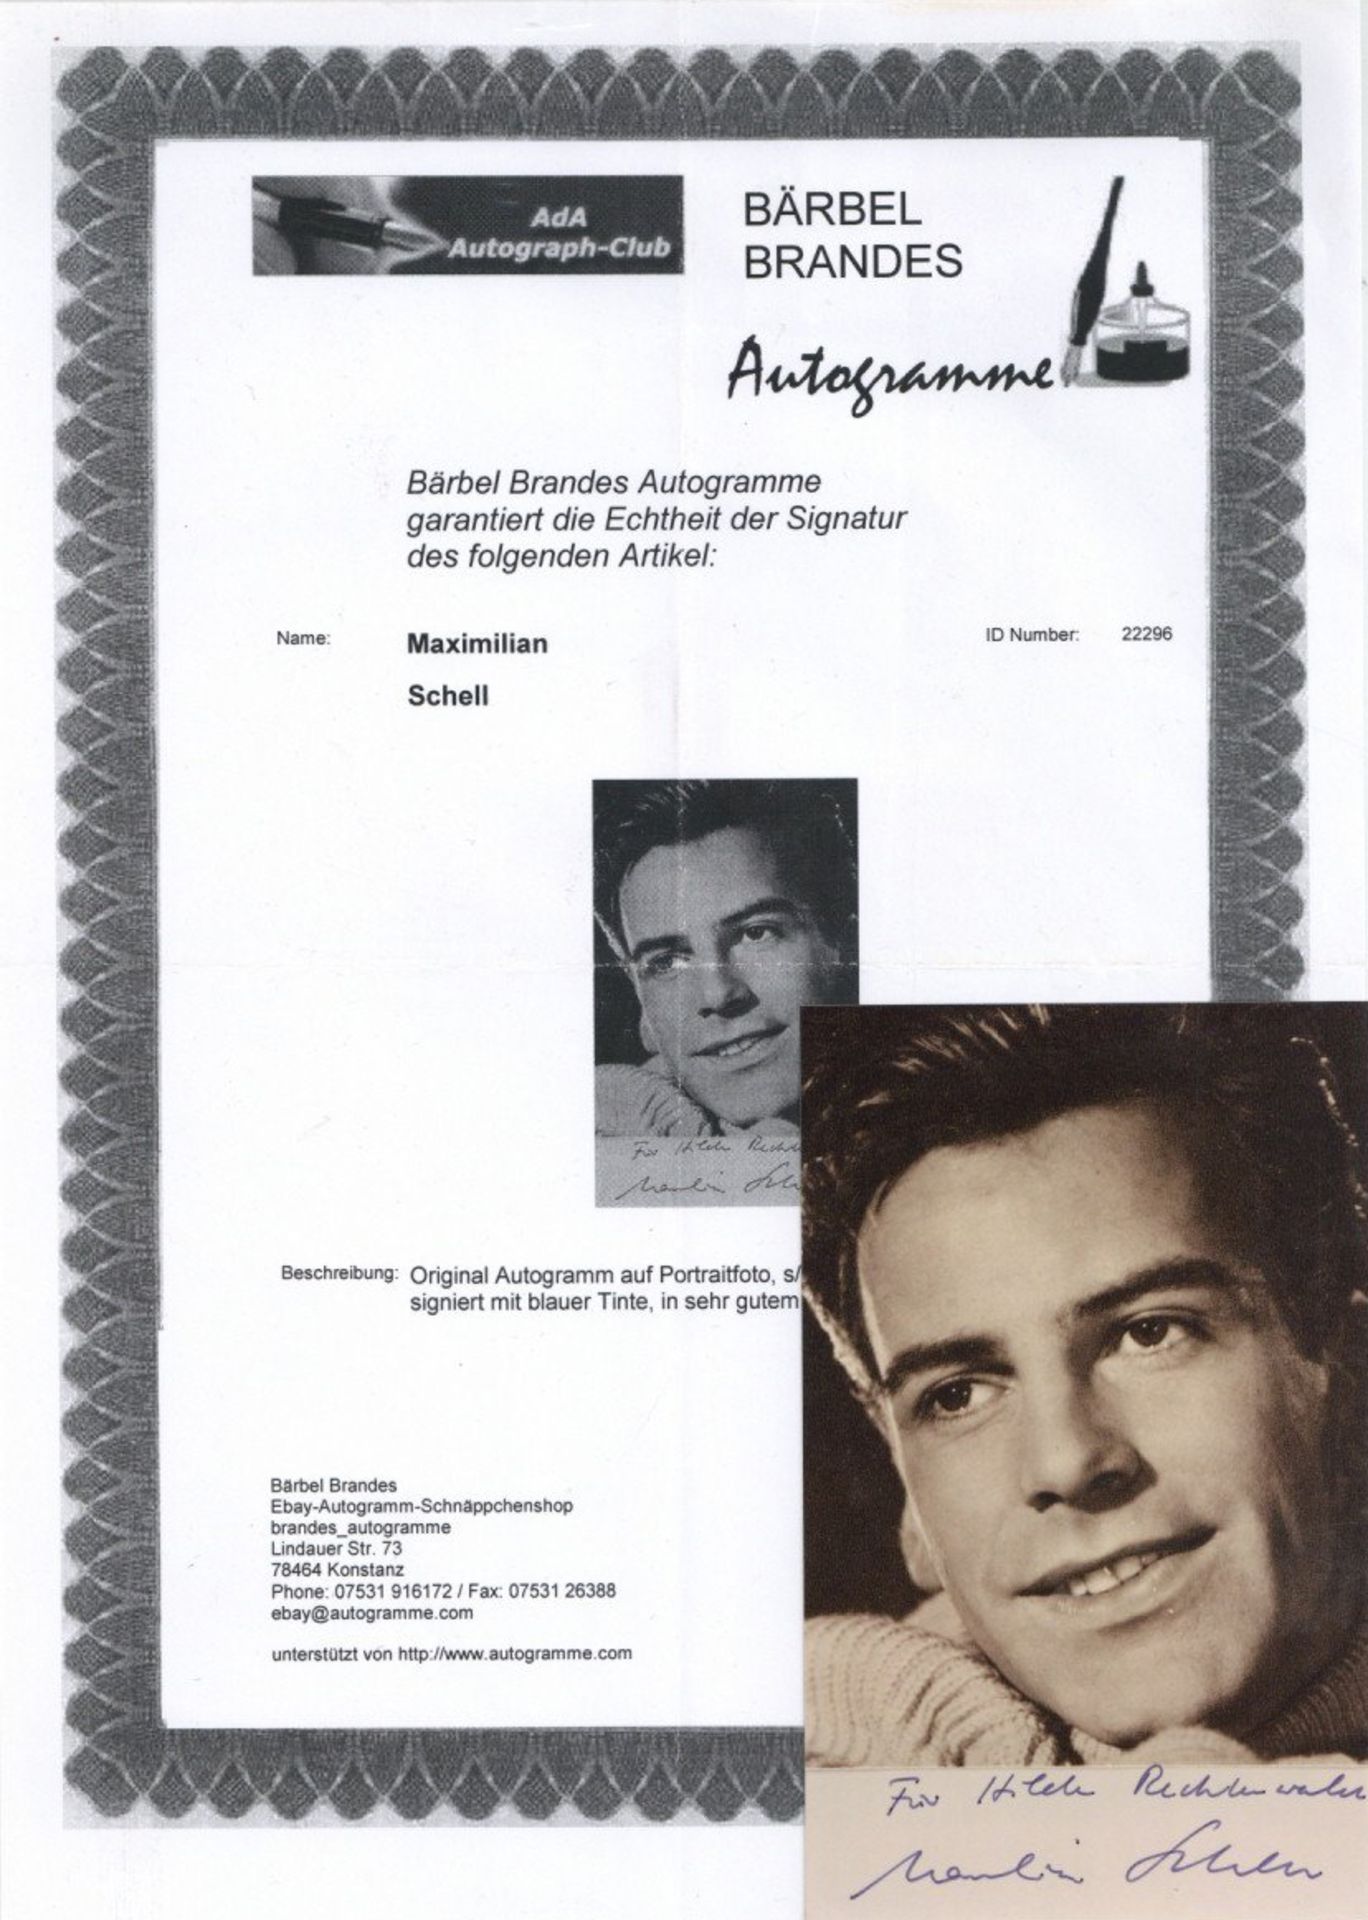 Autograph/Autogramme Portraitfoto 9x14 cm Schell, Maximilian mit Original-Unterschrift und